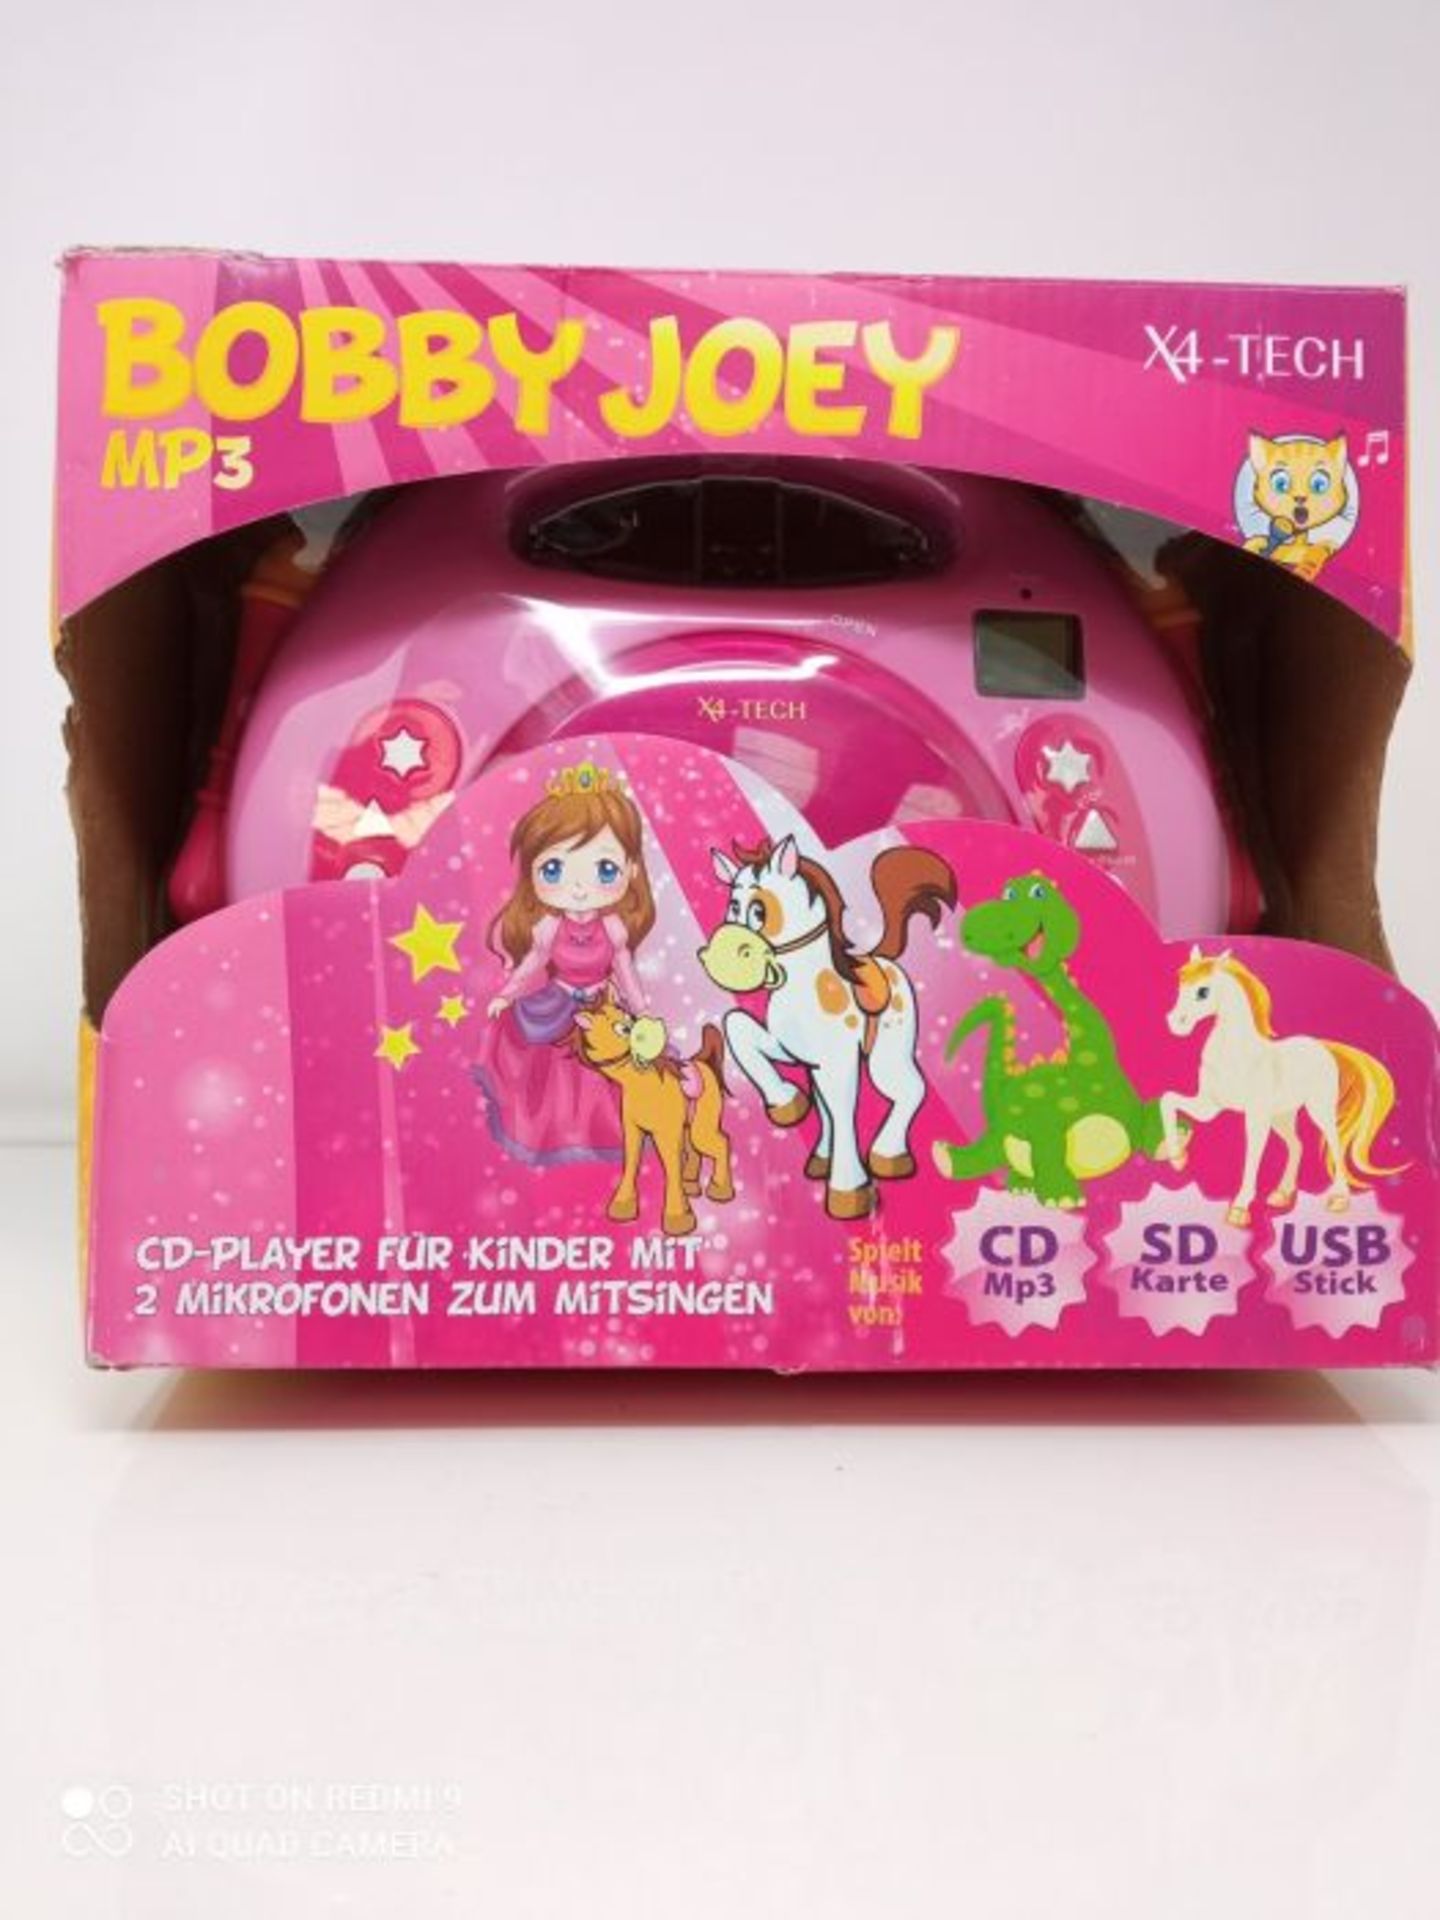 X4-TECH Bobby Joey - Kinder CD Player f??r USB-Stick, SD-Karte, MP3-CD - 2X Mikrofon - Image 2 of 3